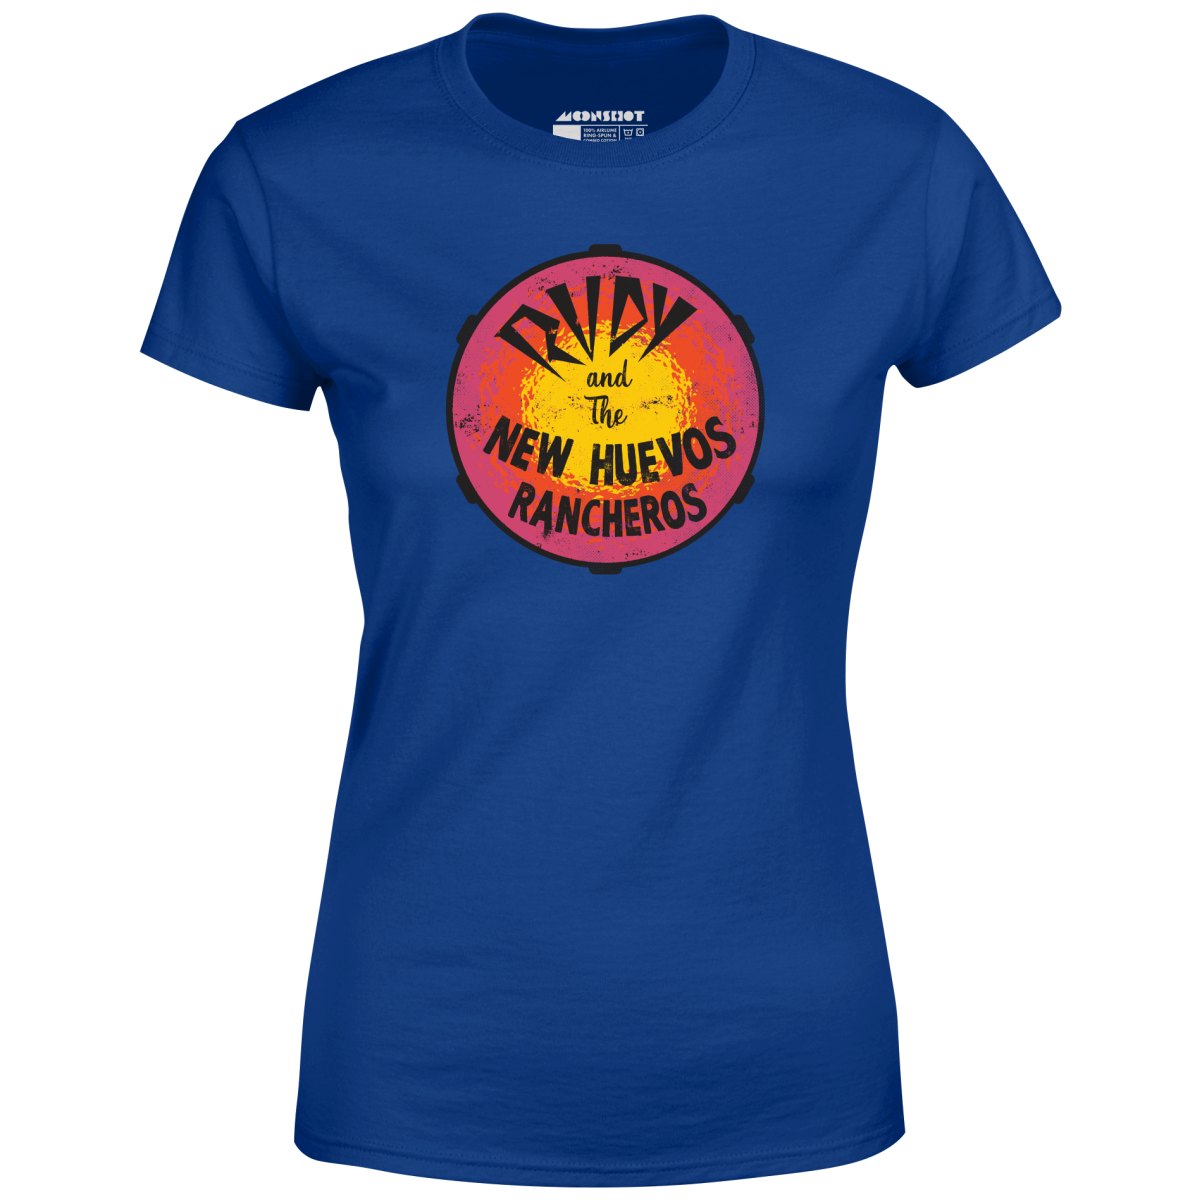 Rudy and the New Huevos Rancheros - Women's T-Shirt